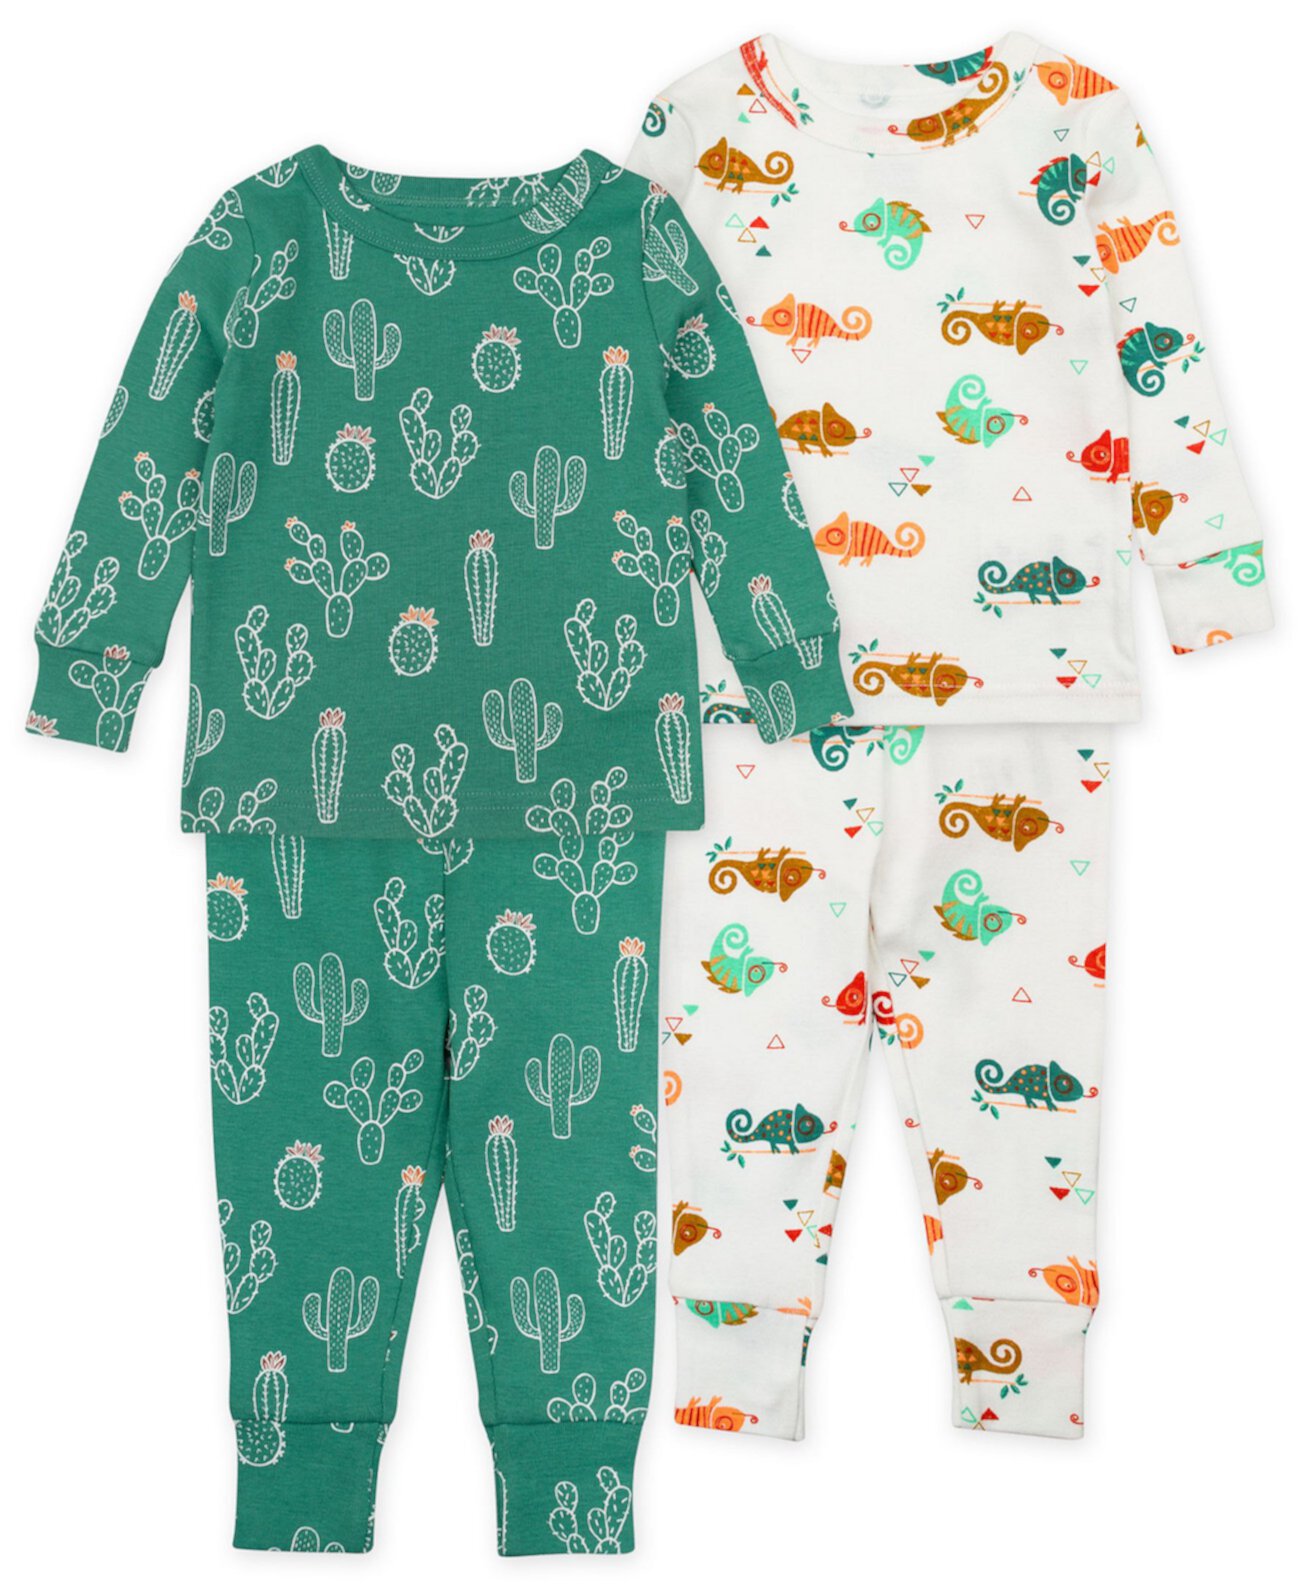 Toddler Boys Chameleon Pajama Set, 4 Piece Mac & Moon